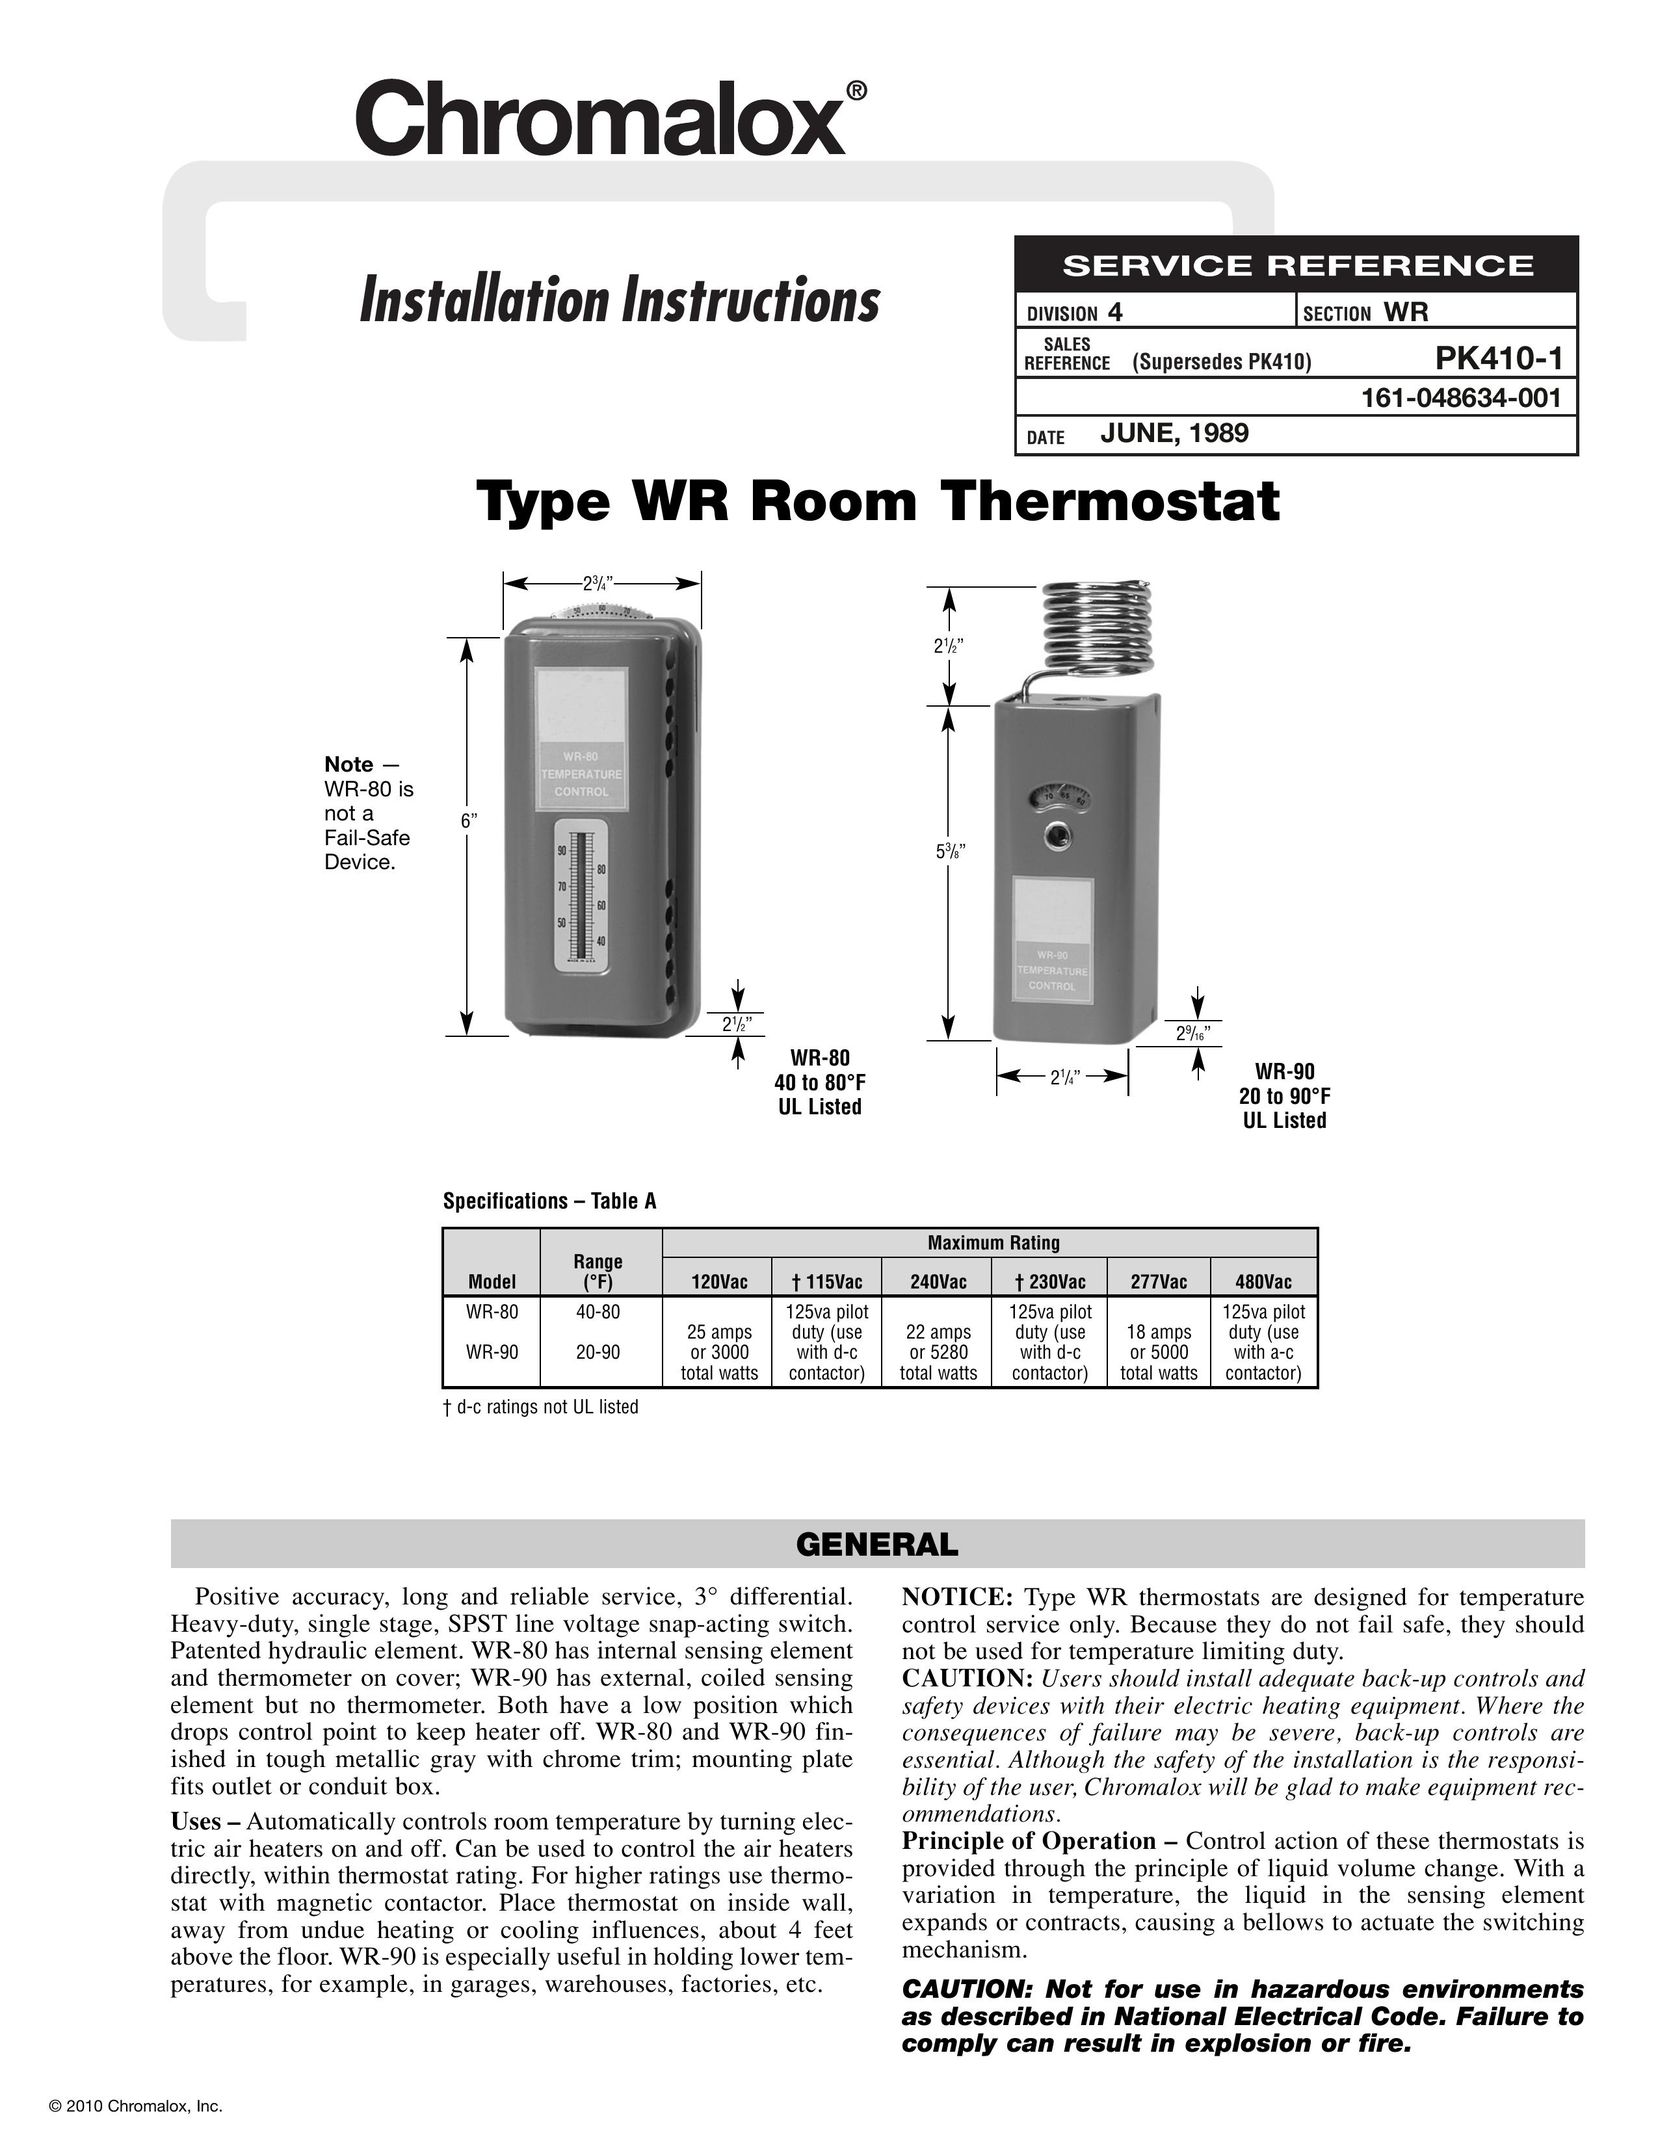 Chromalox PK410-1 Thermostat User Manual